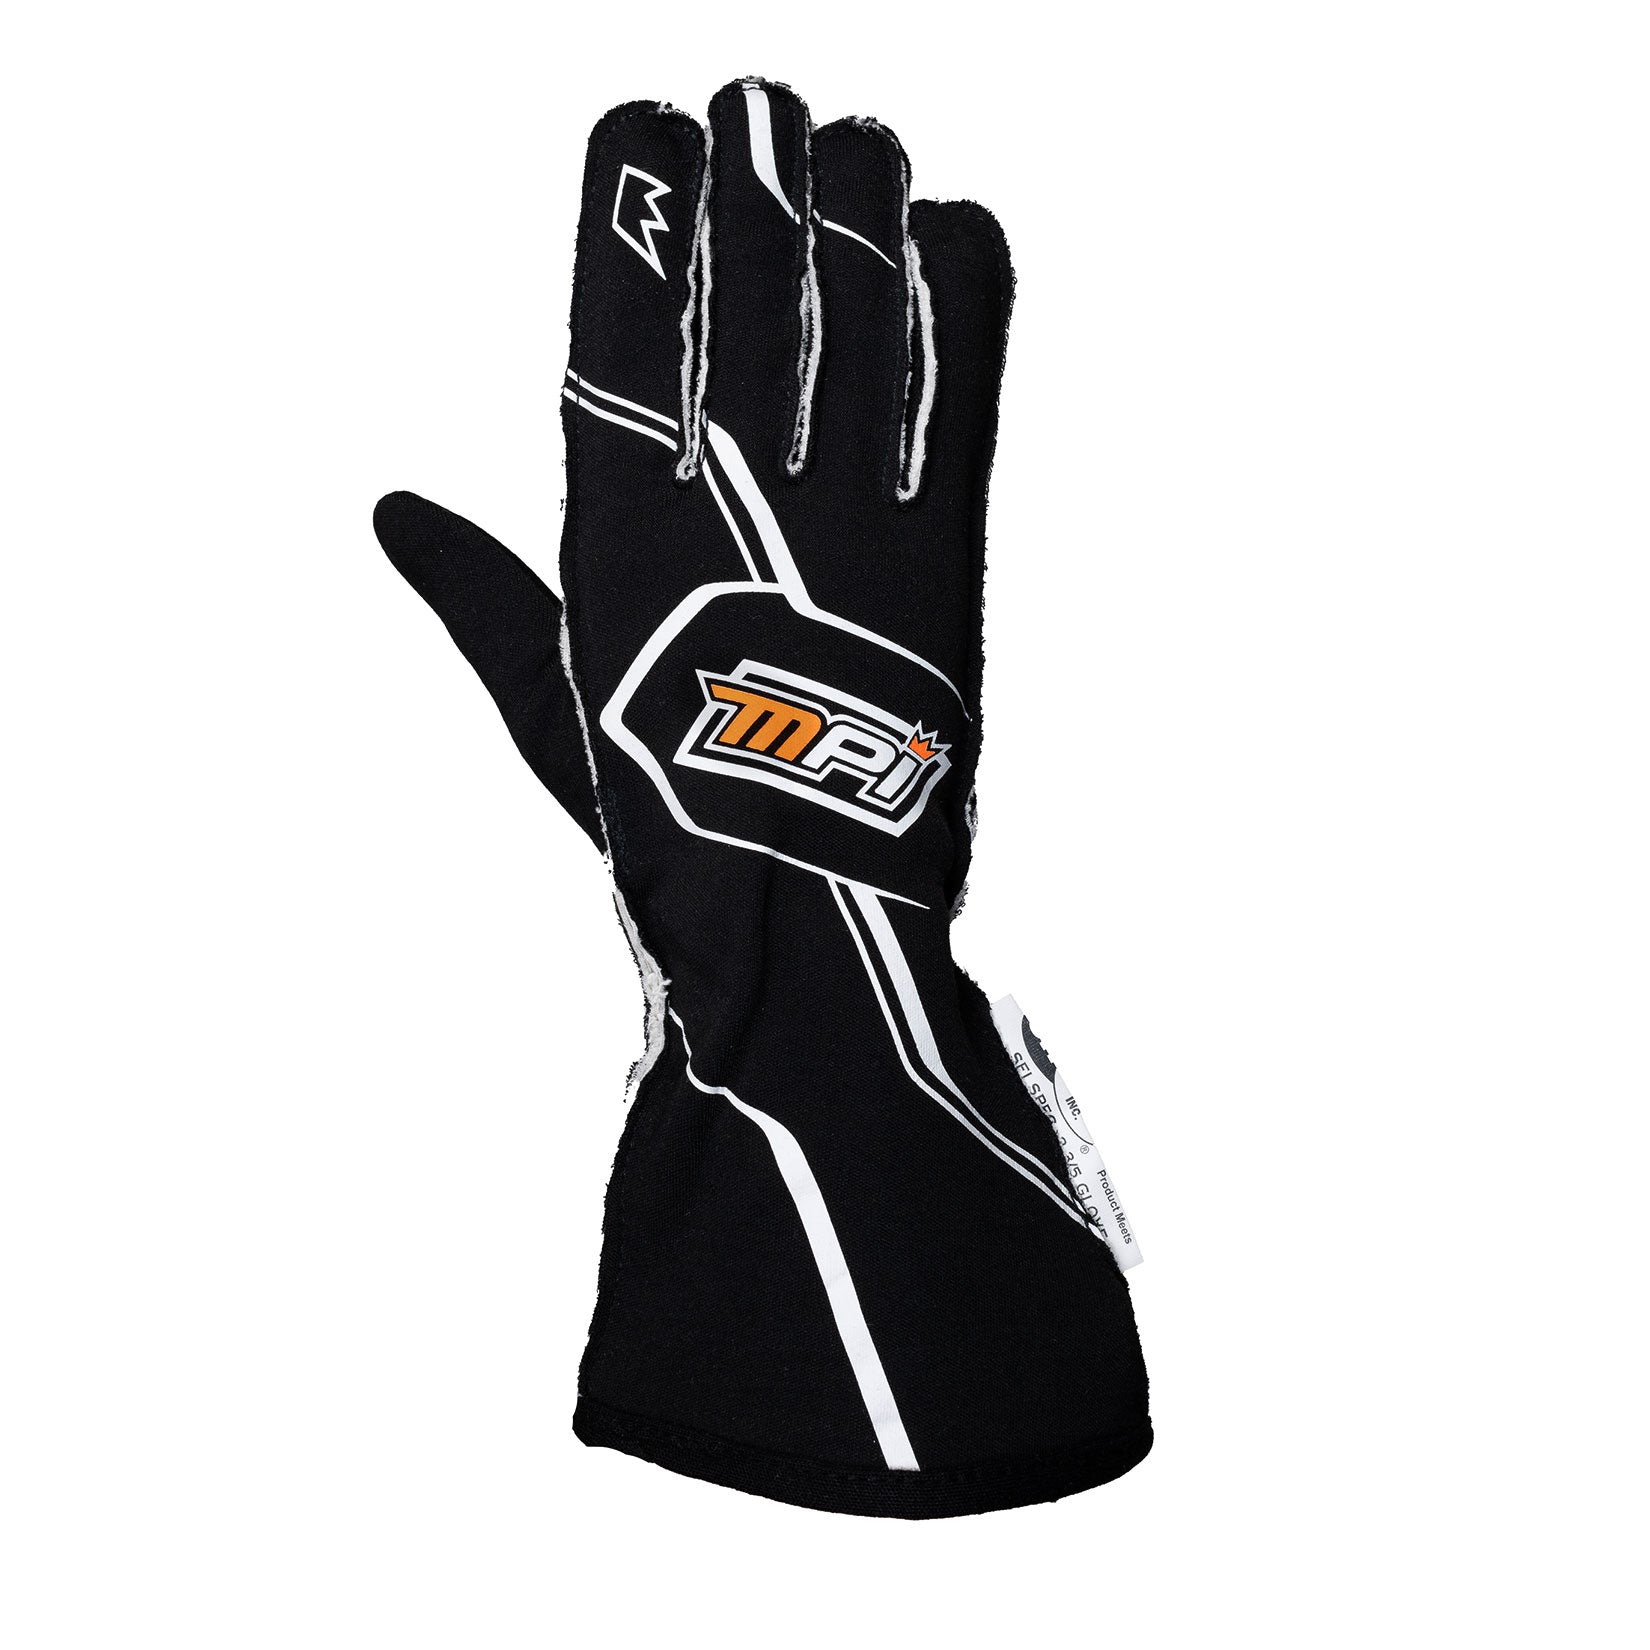 Max Papis Innovations Racing Gloves Black XS MPI display